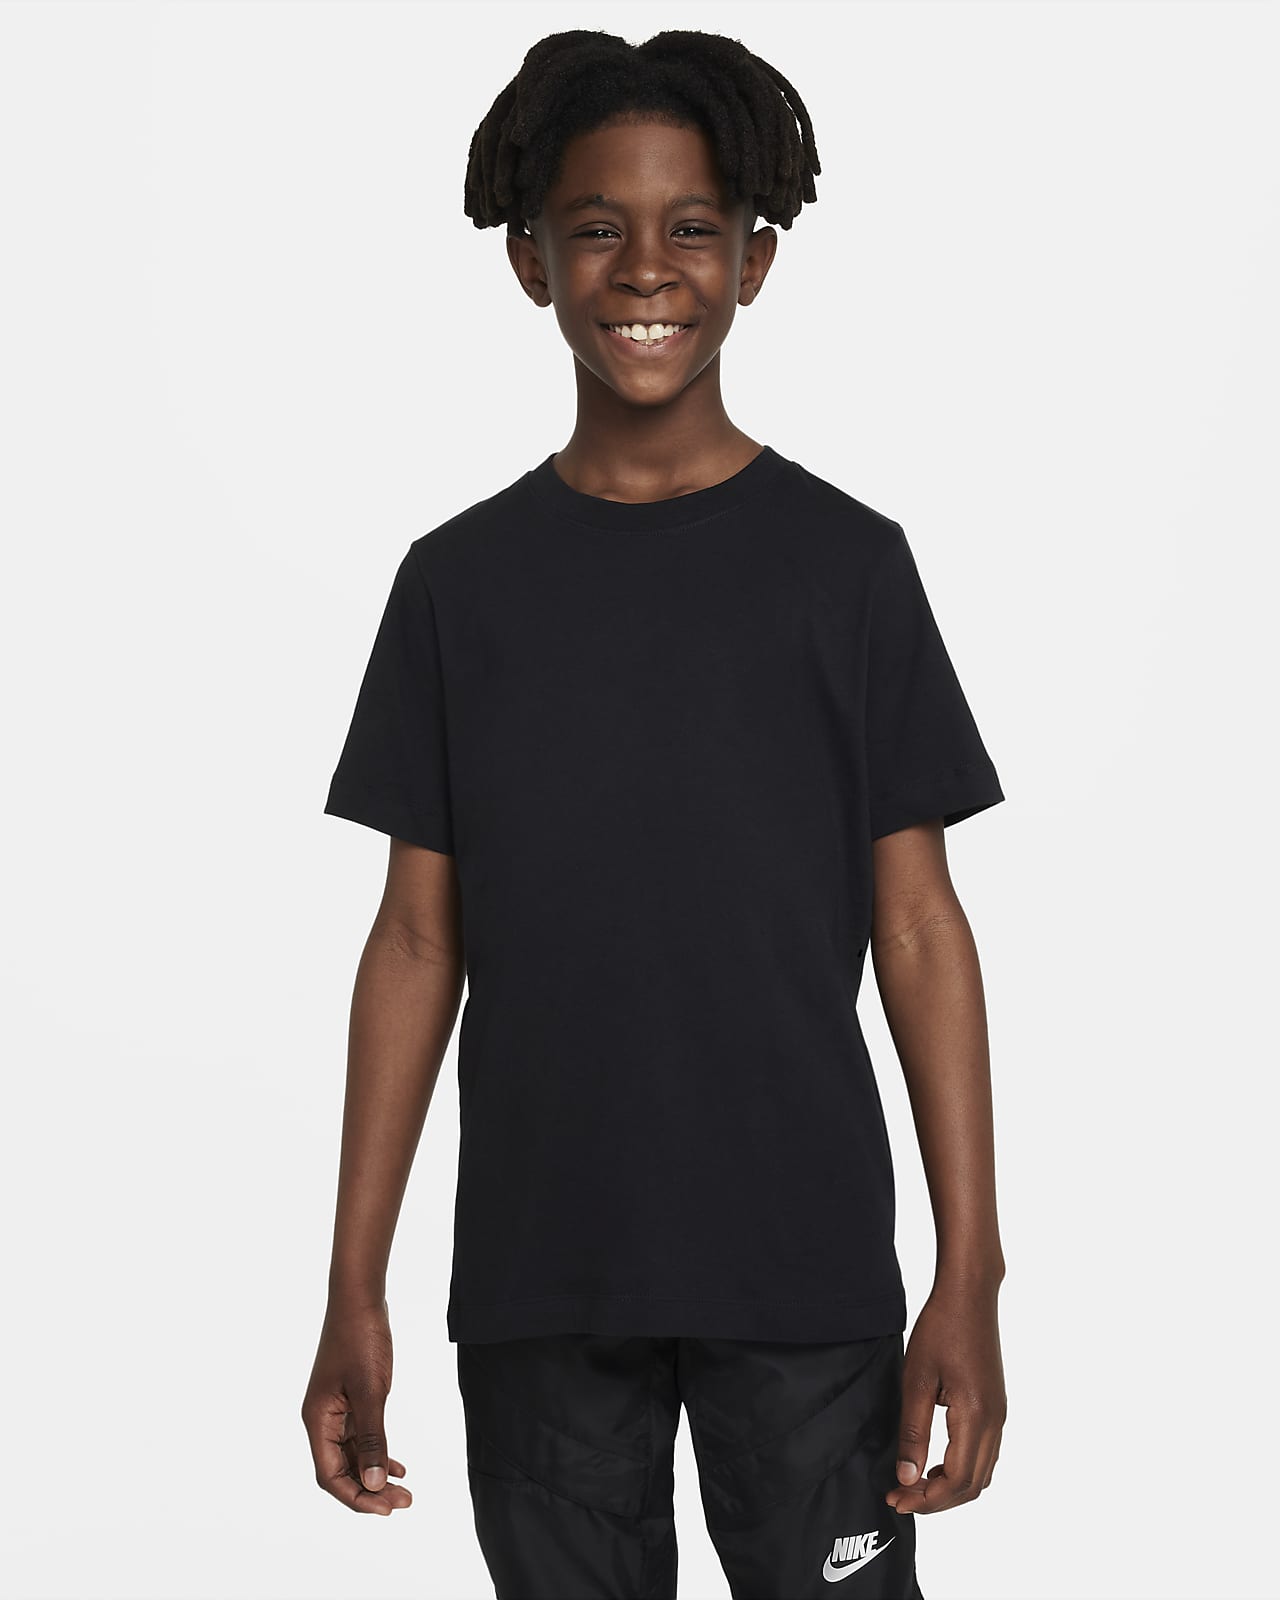 Nike Big Kids' Short-Sleeve T-Shirt